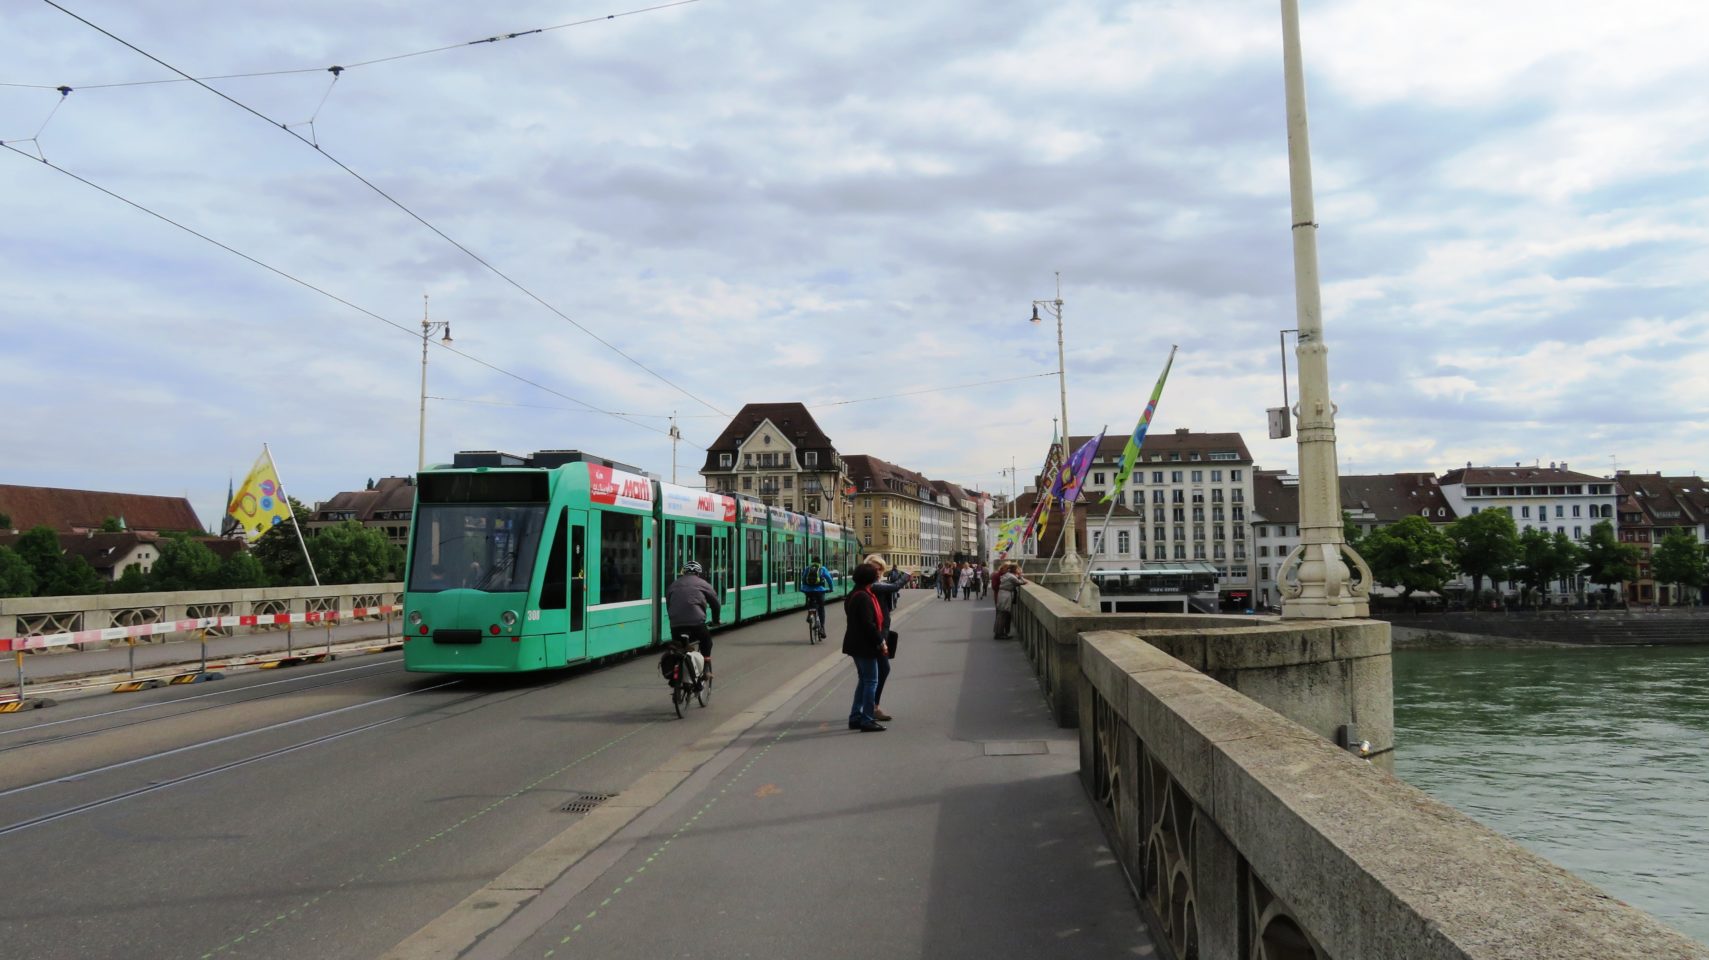 Tram on the Mittlere Brucke in Basel, Switzerland